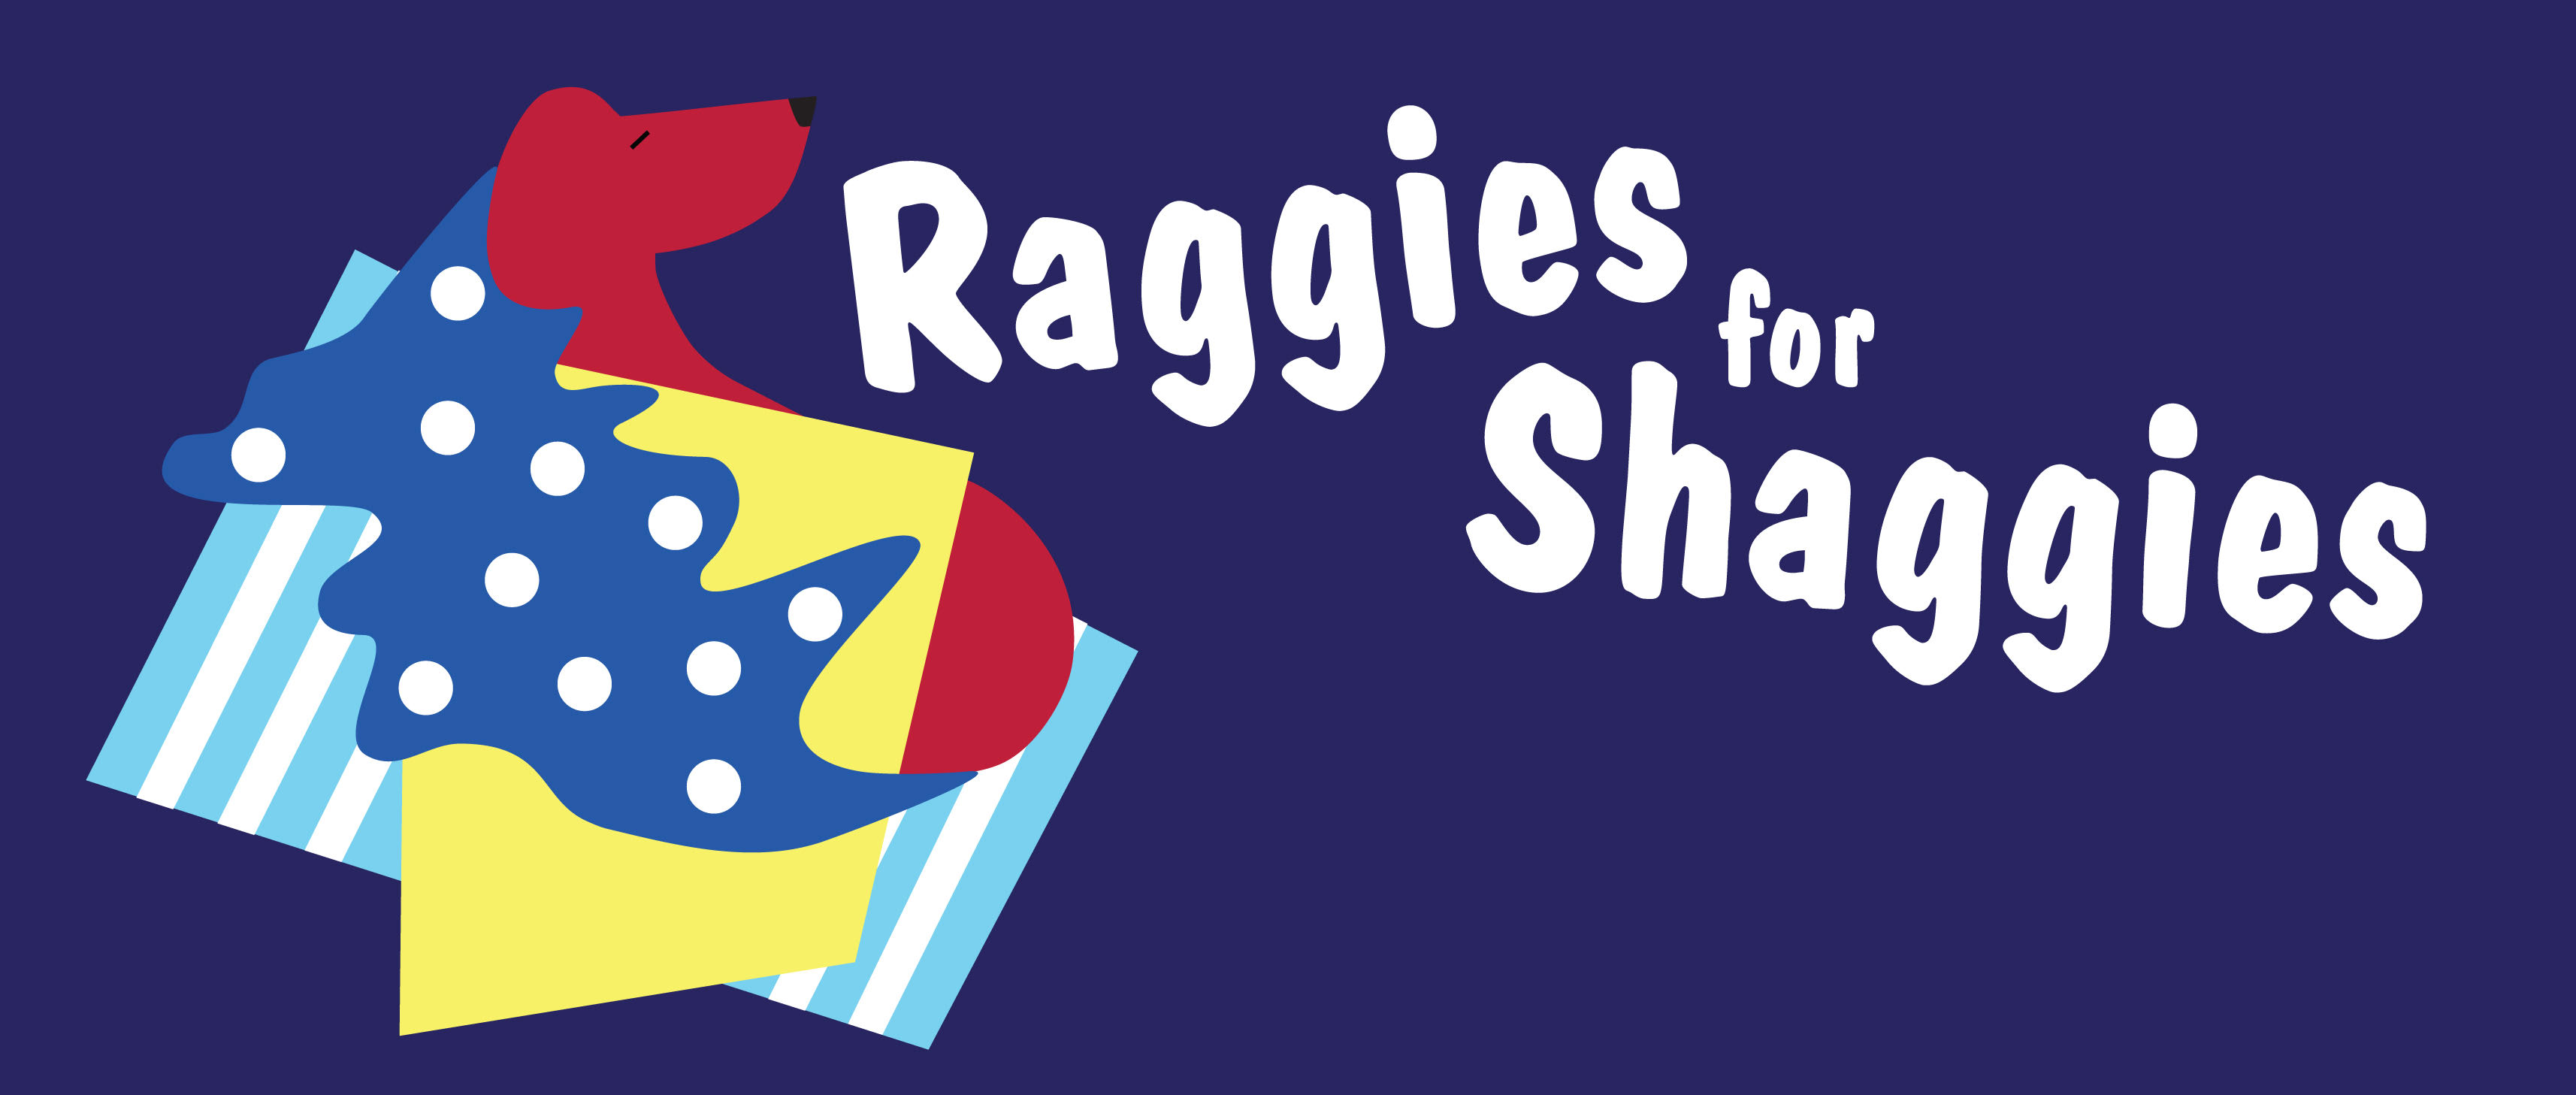 Raggies For Shaggies